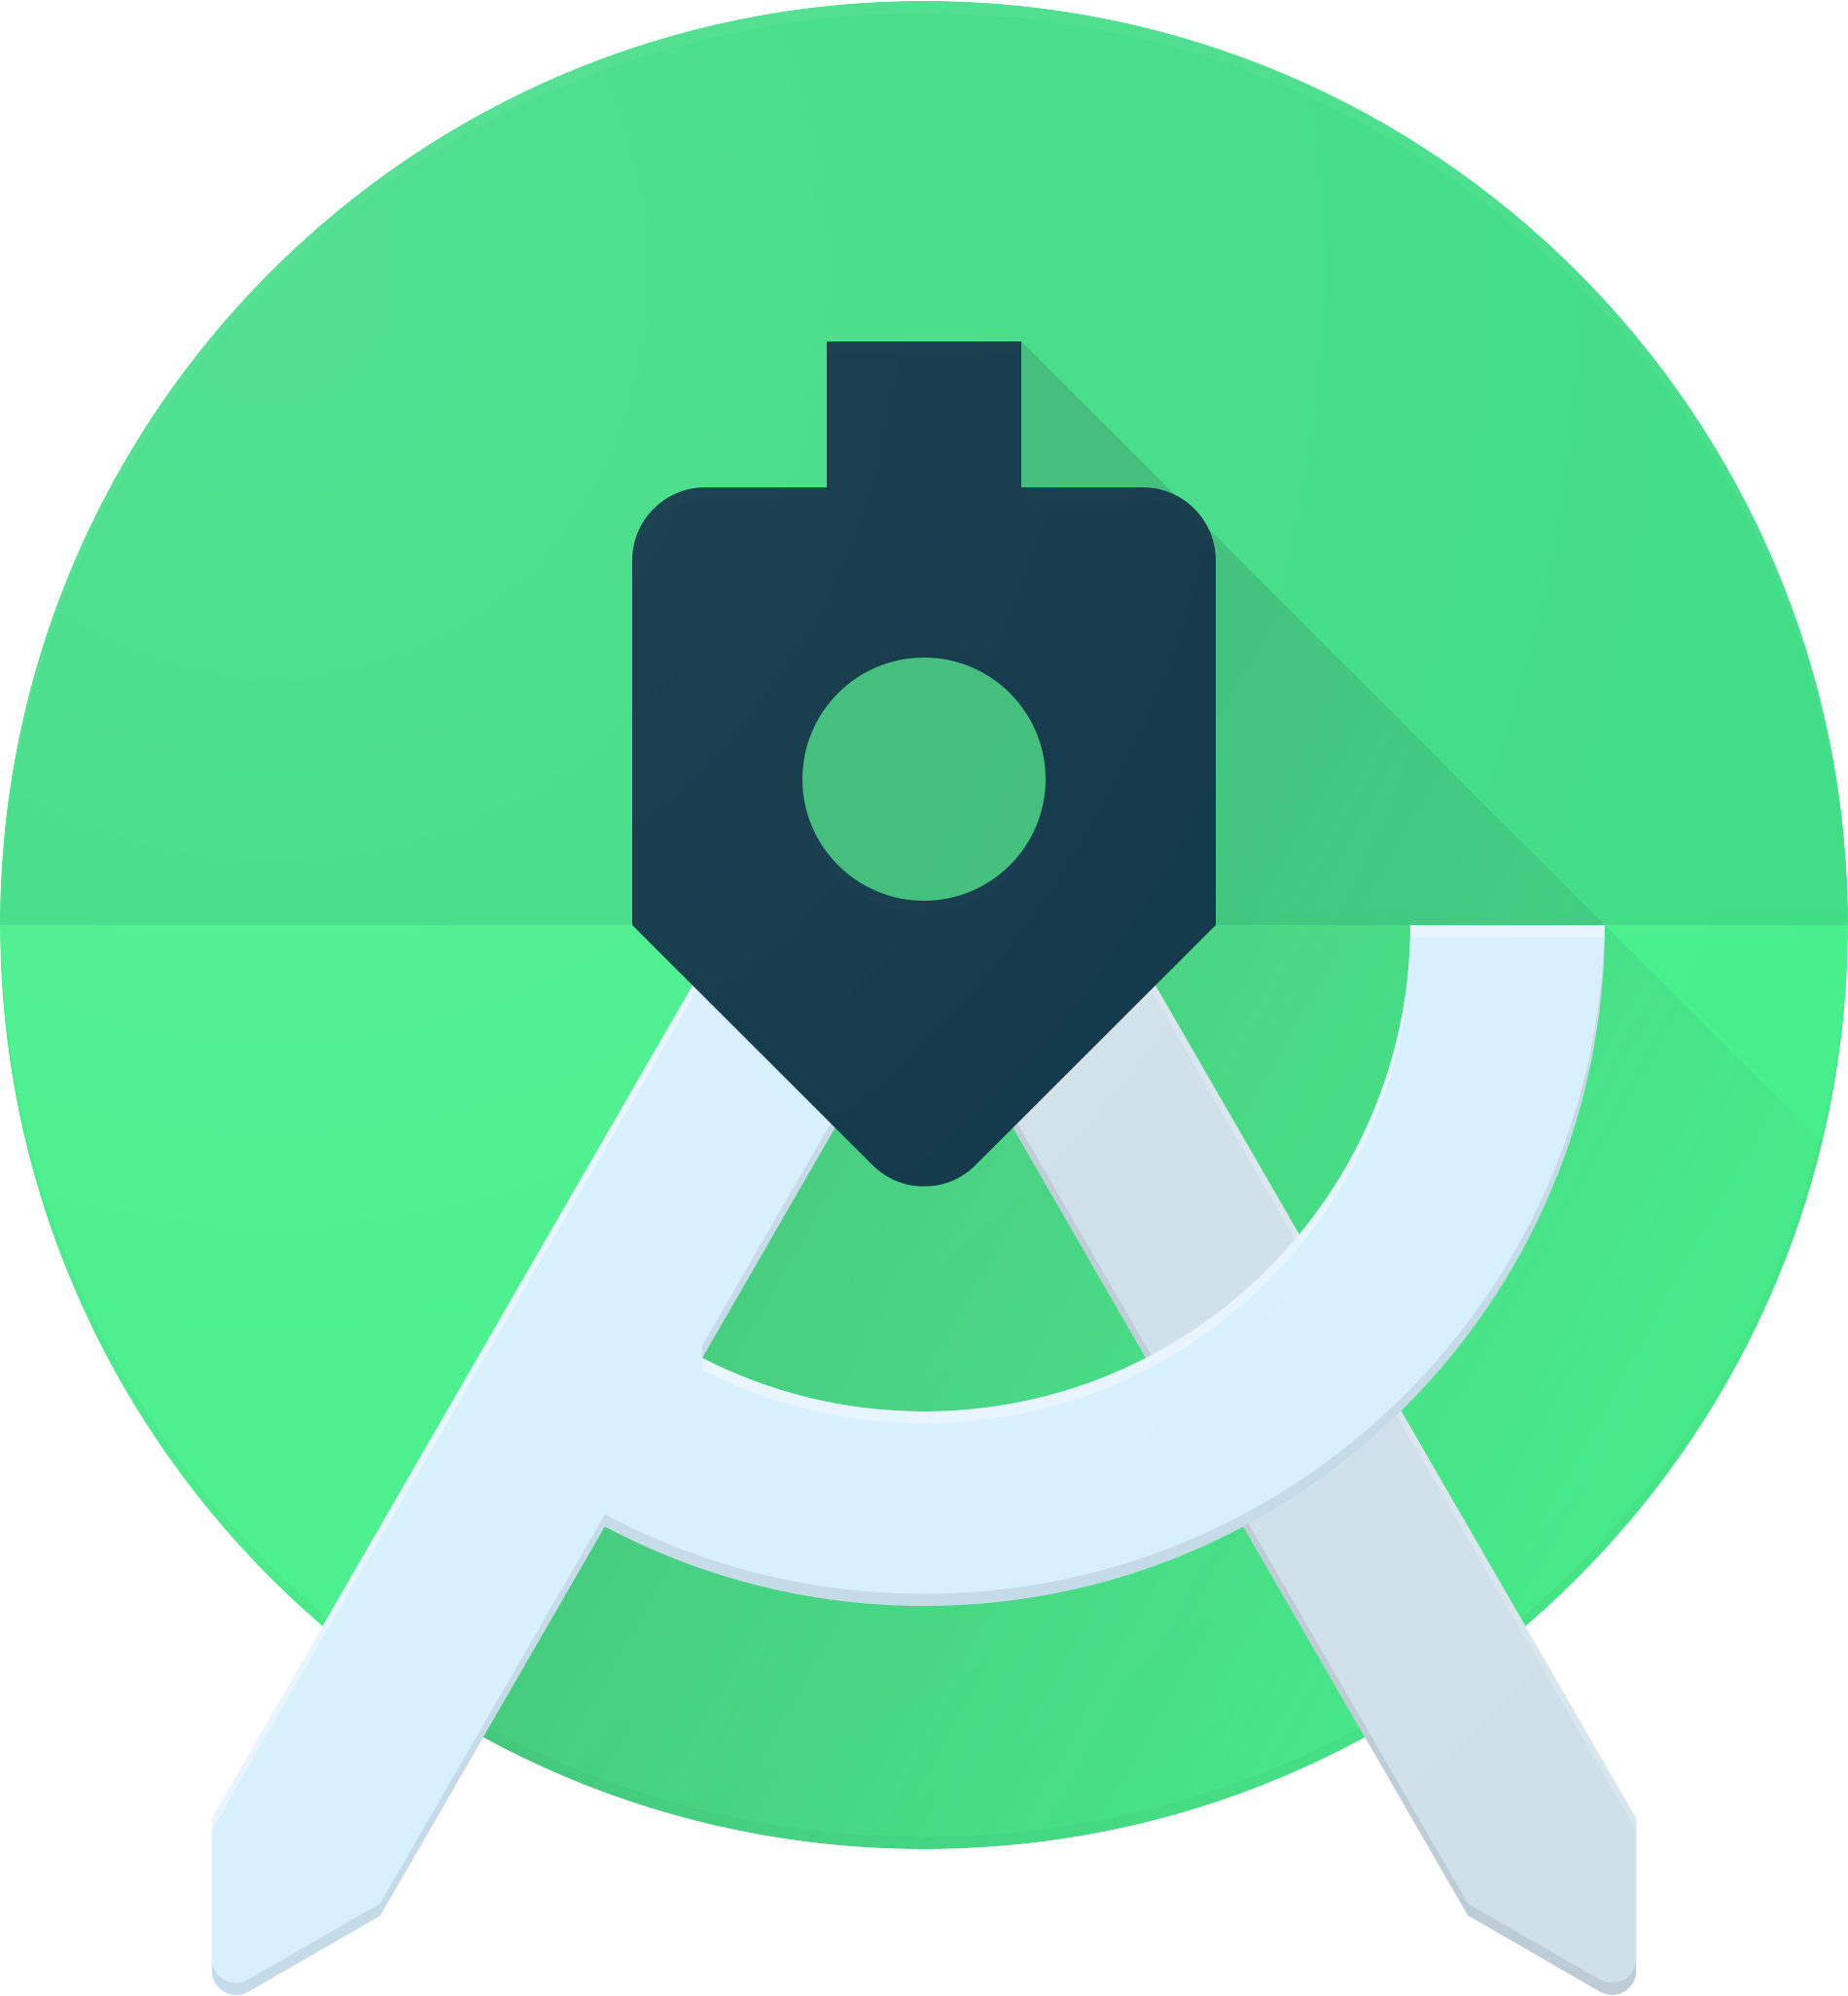 AndroidStudio logo